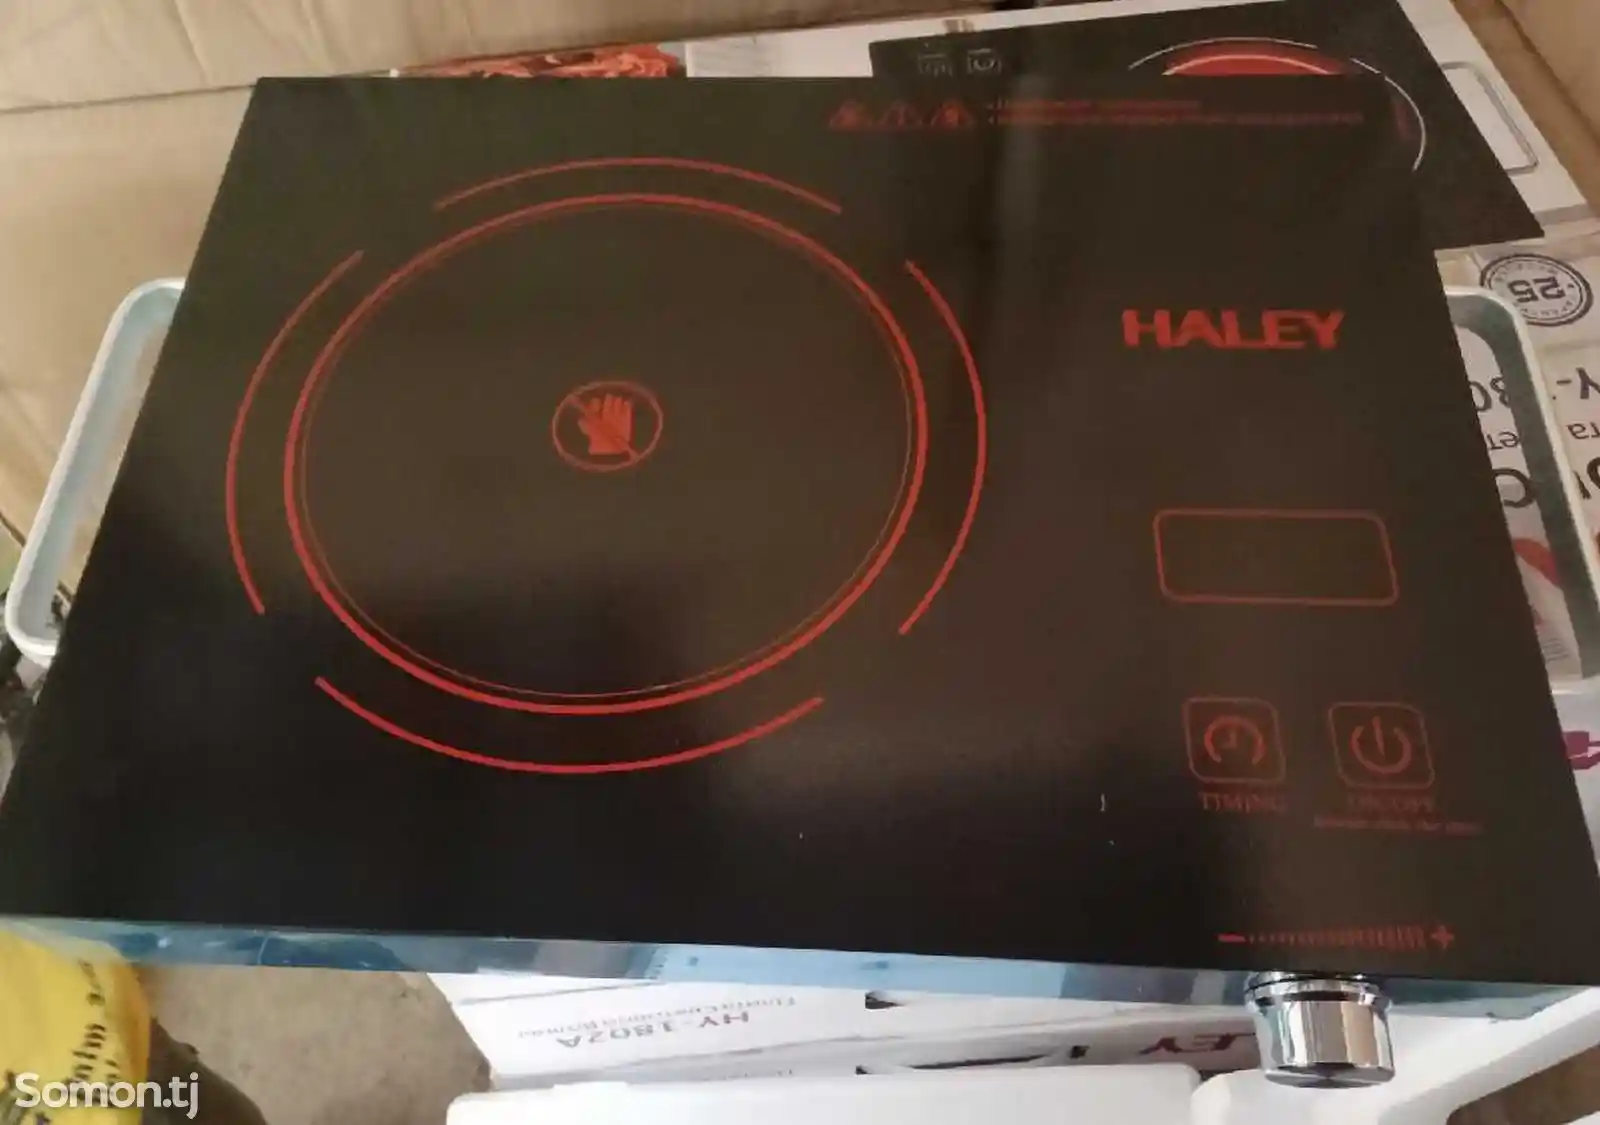 Плита лазерная HALEY-1